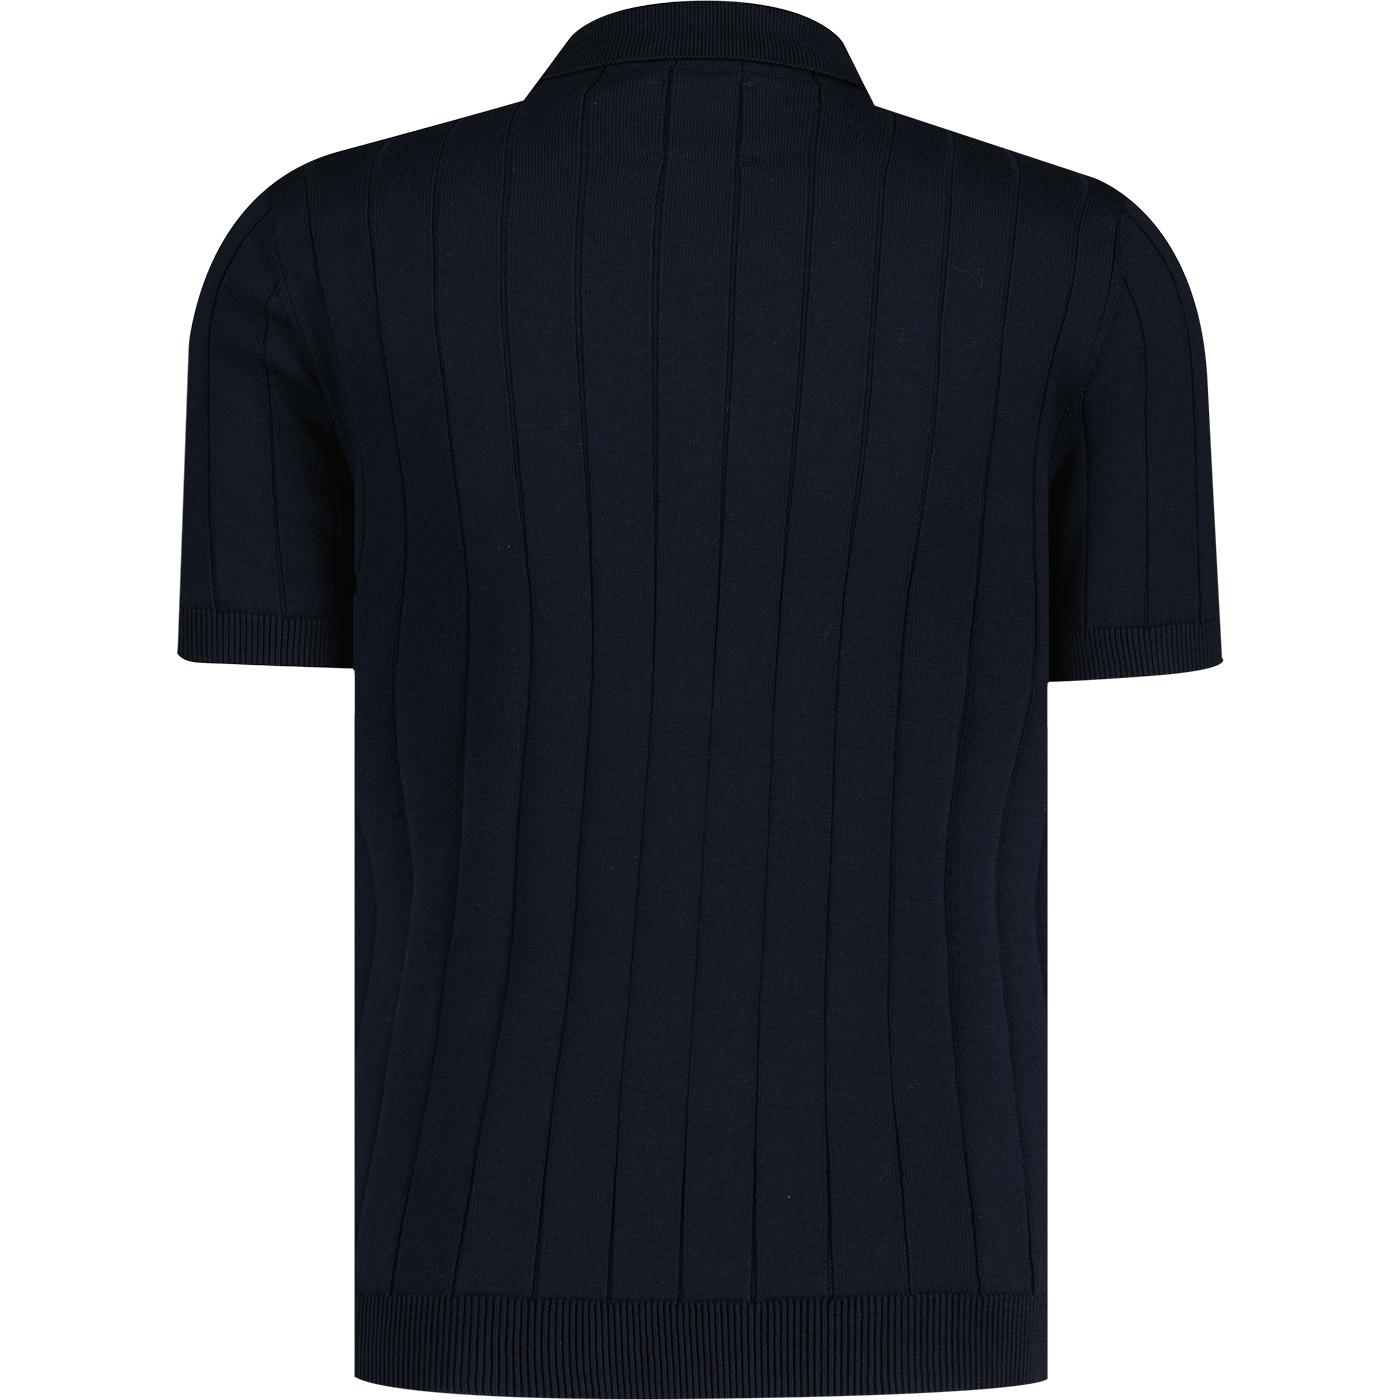 Guide London Retro Mod Ribbed Knit Zip Neck Polo Shirt Navy